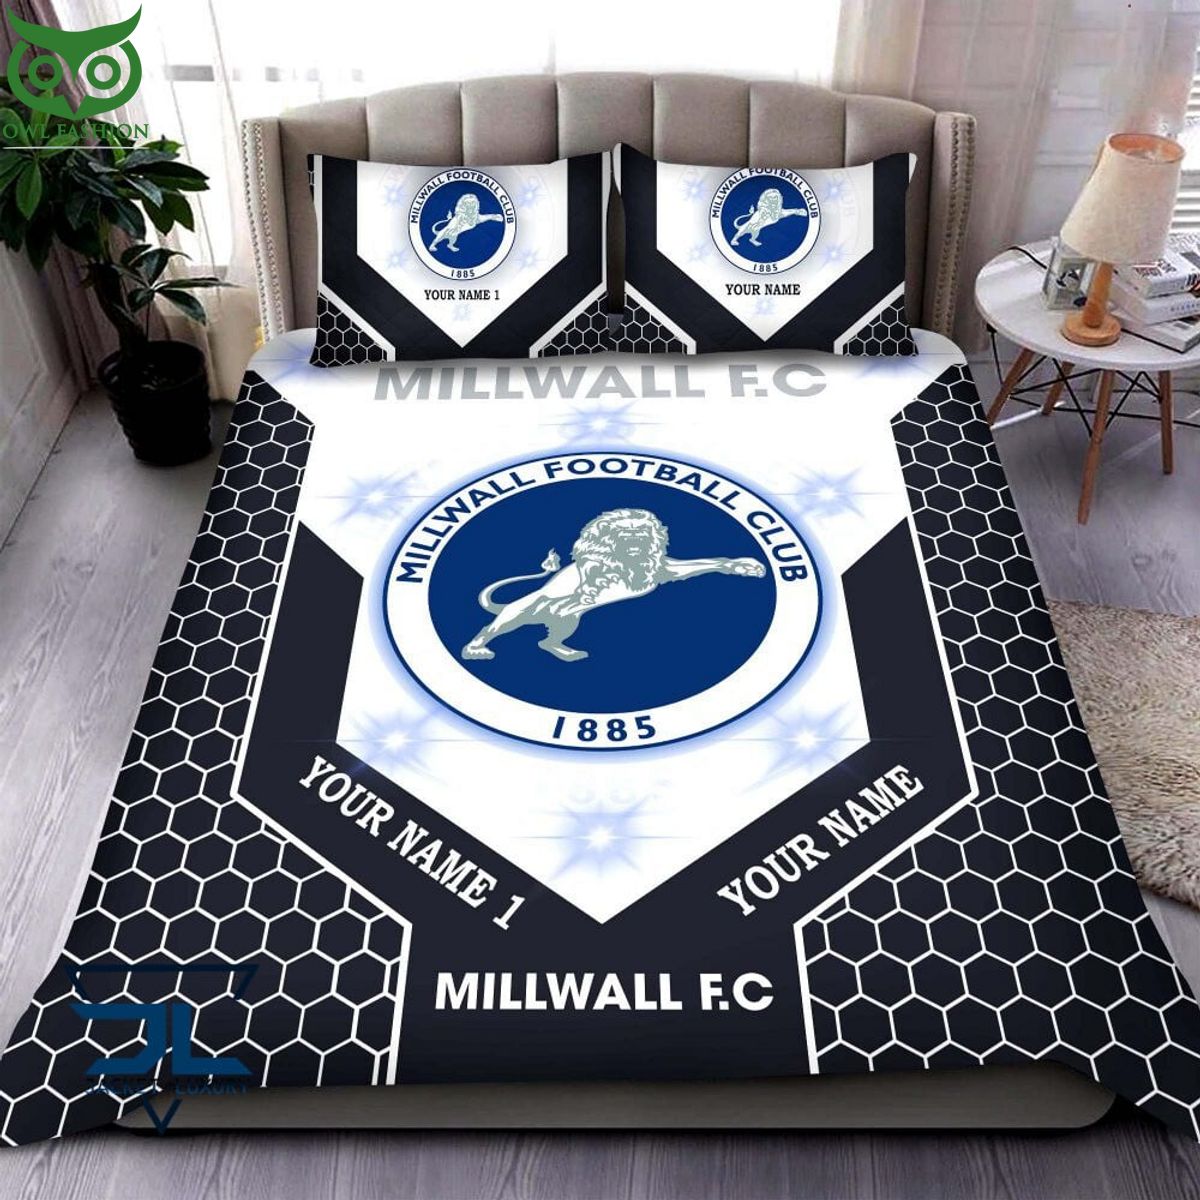 Millwall F.C EFL Champion Customized Bedding Set It is too funny